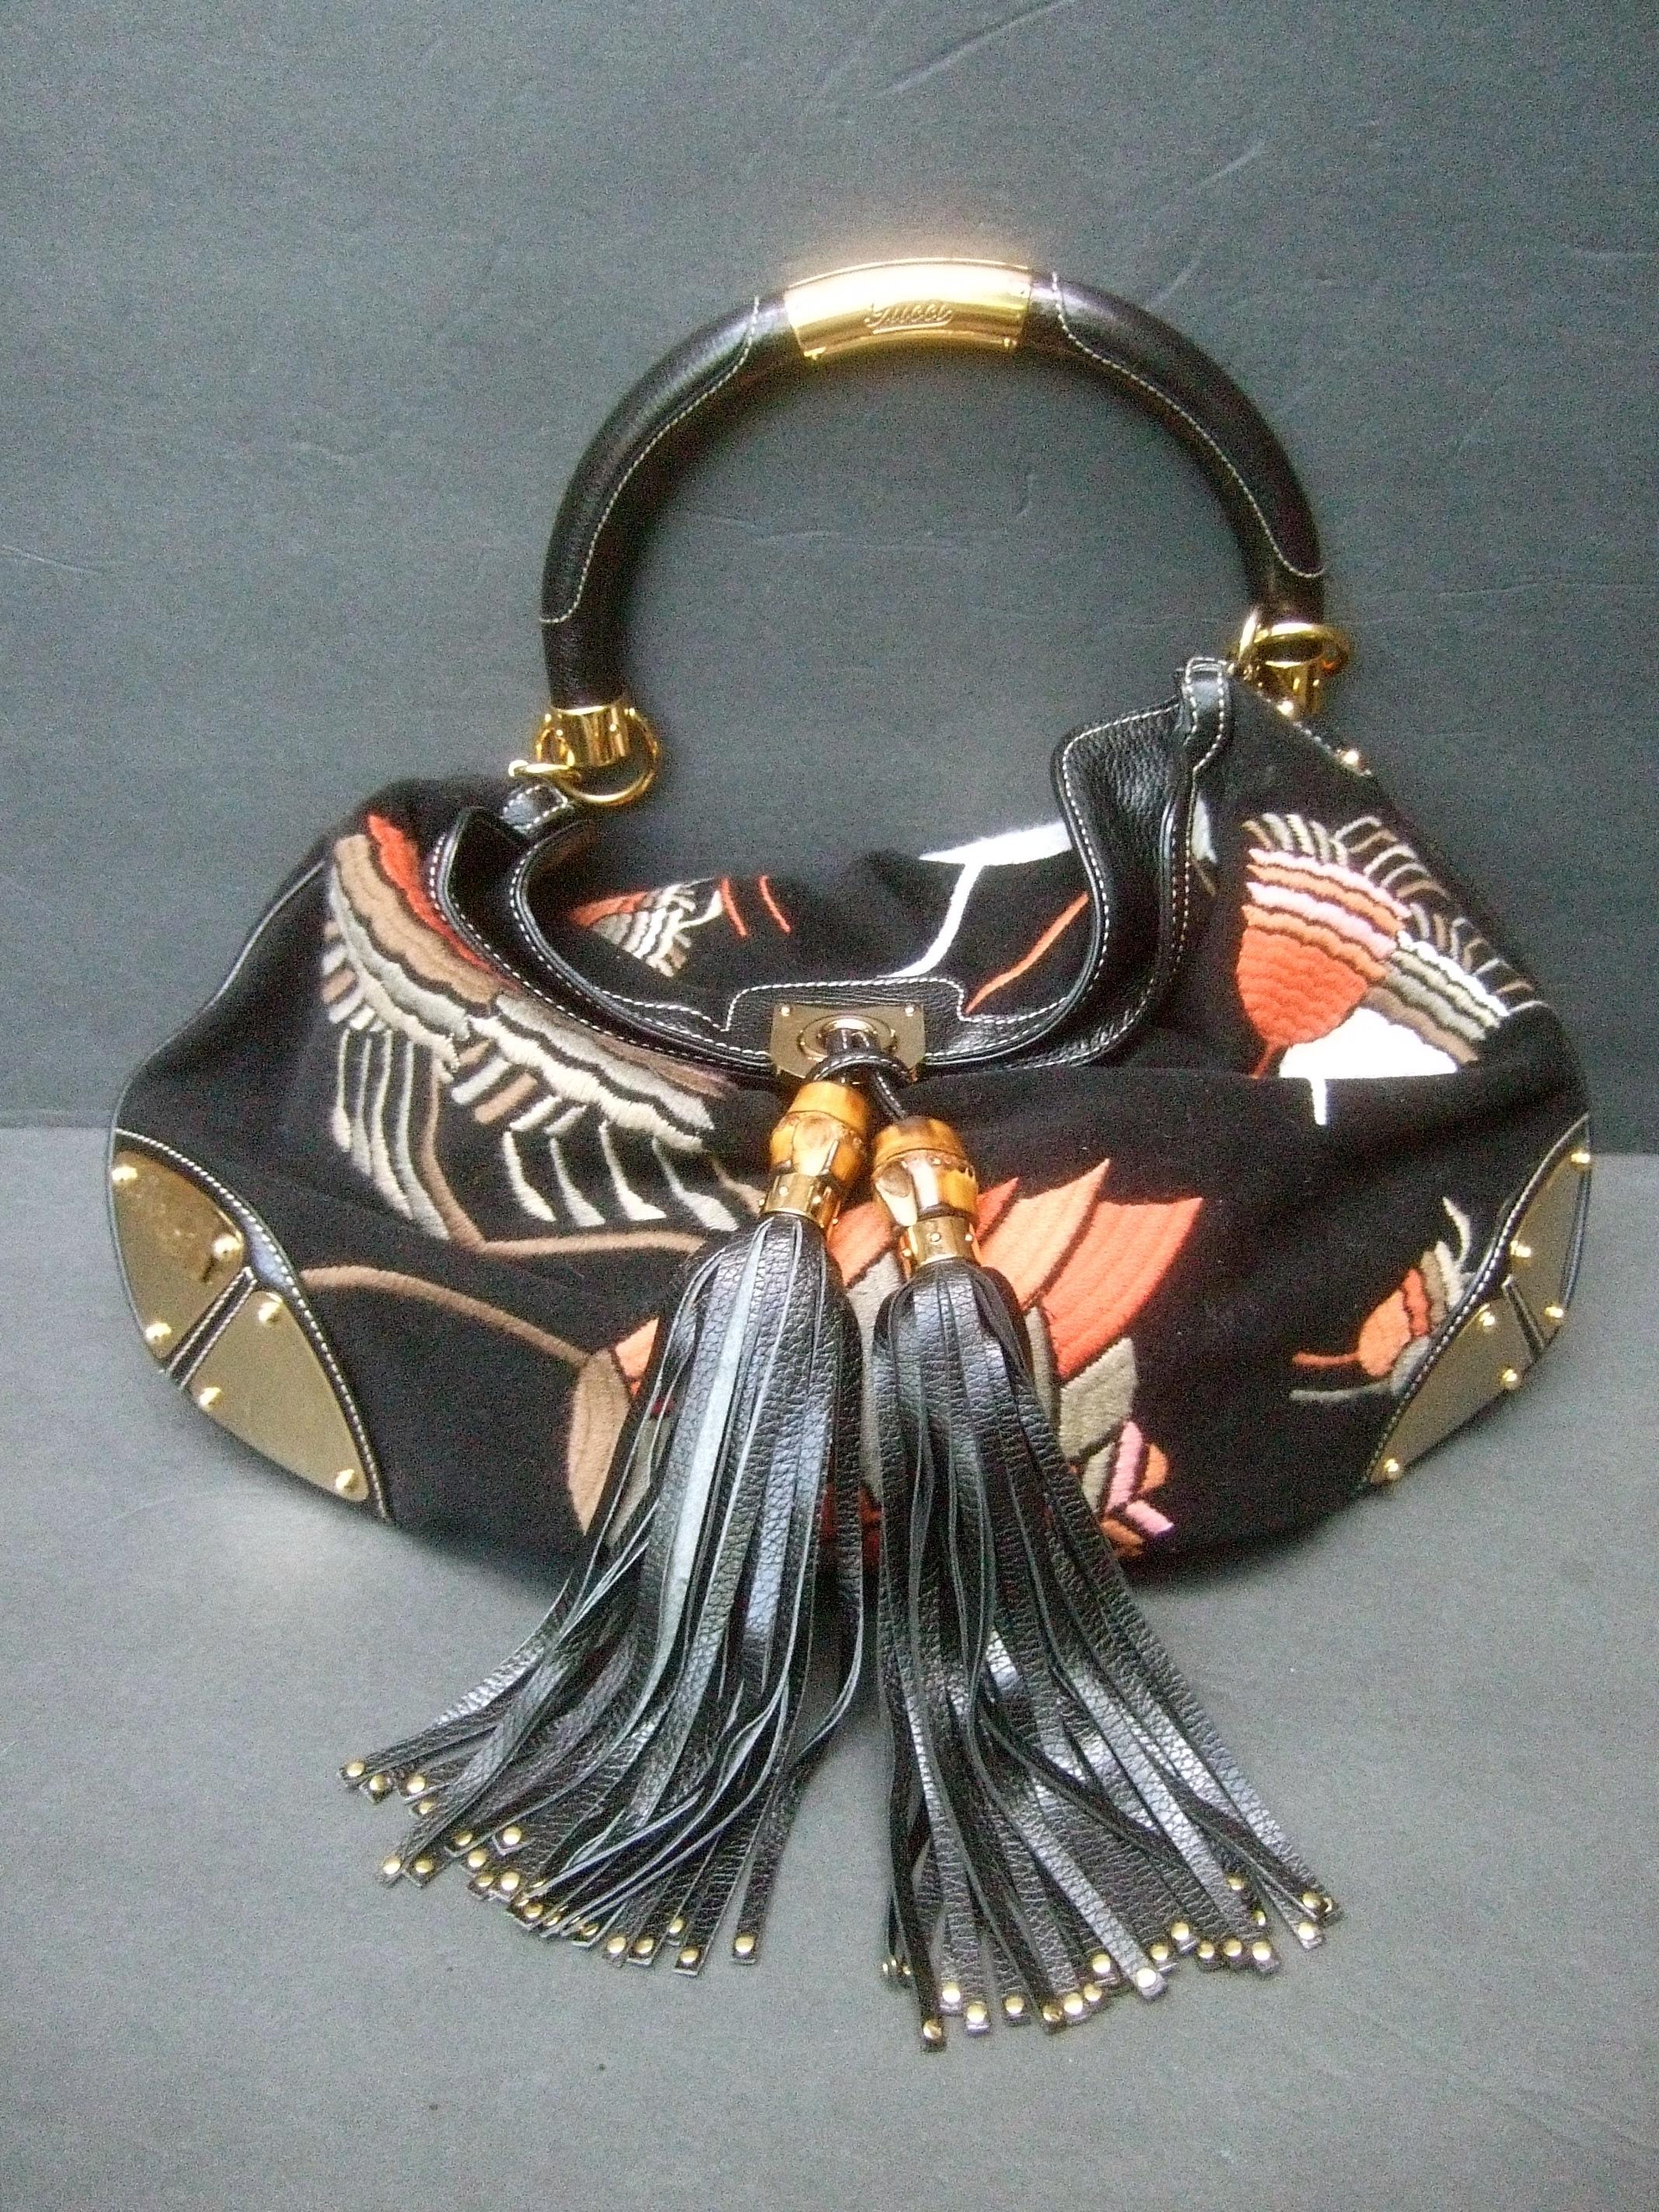 Gucci Italy Rare Embroidered Black Wool Large Handbag - Shoulder Bag c 1990s 7